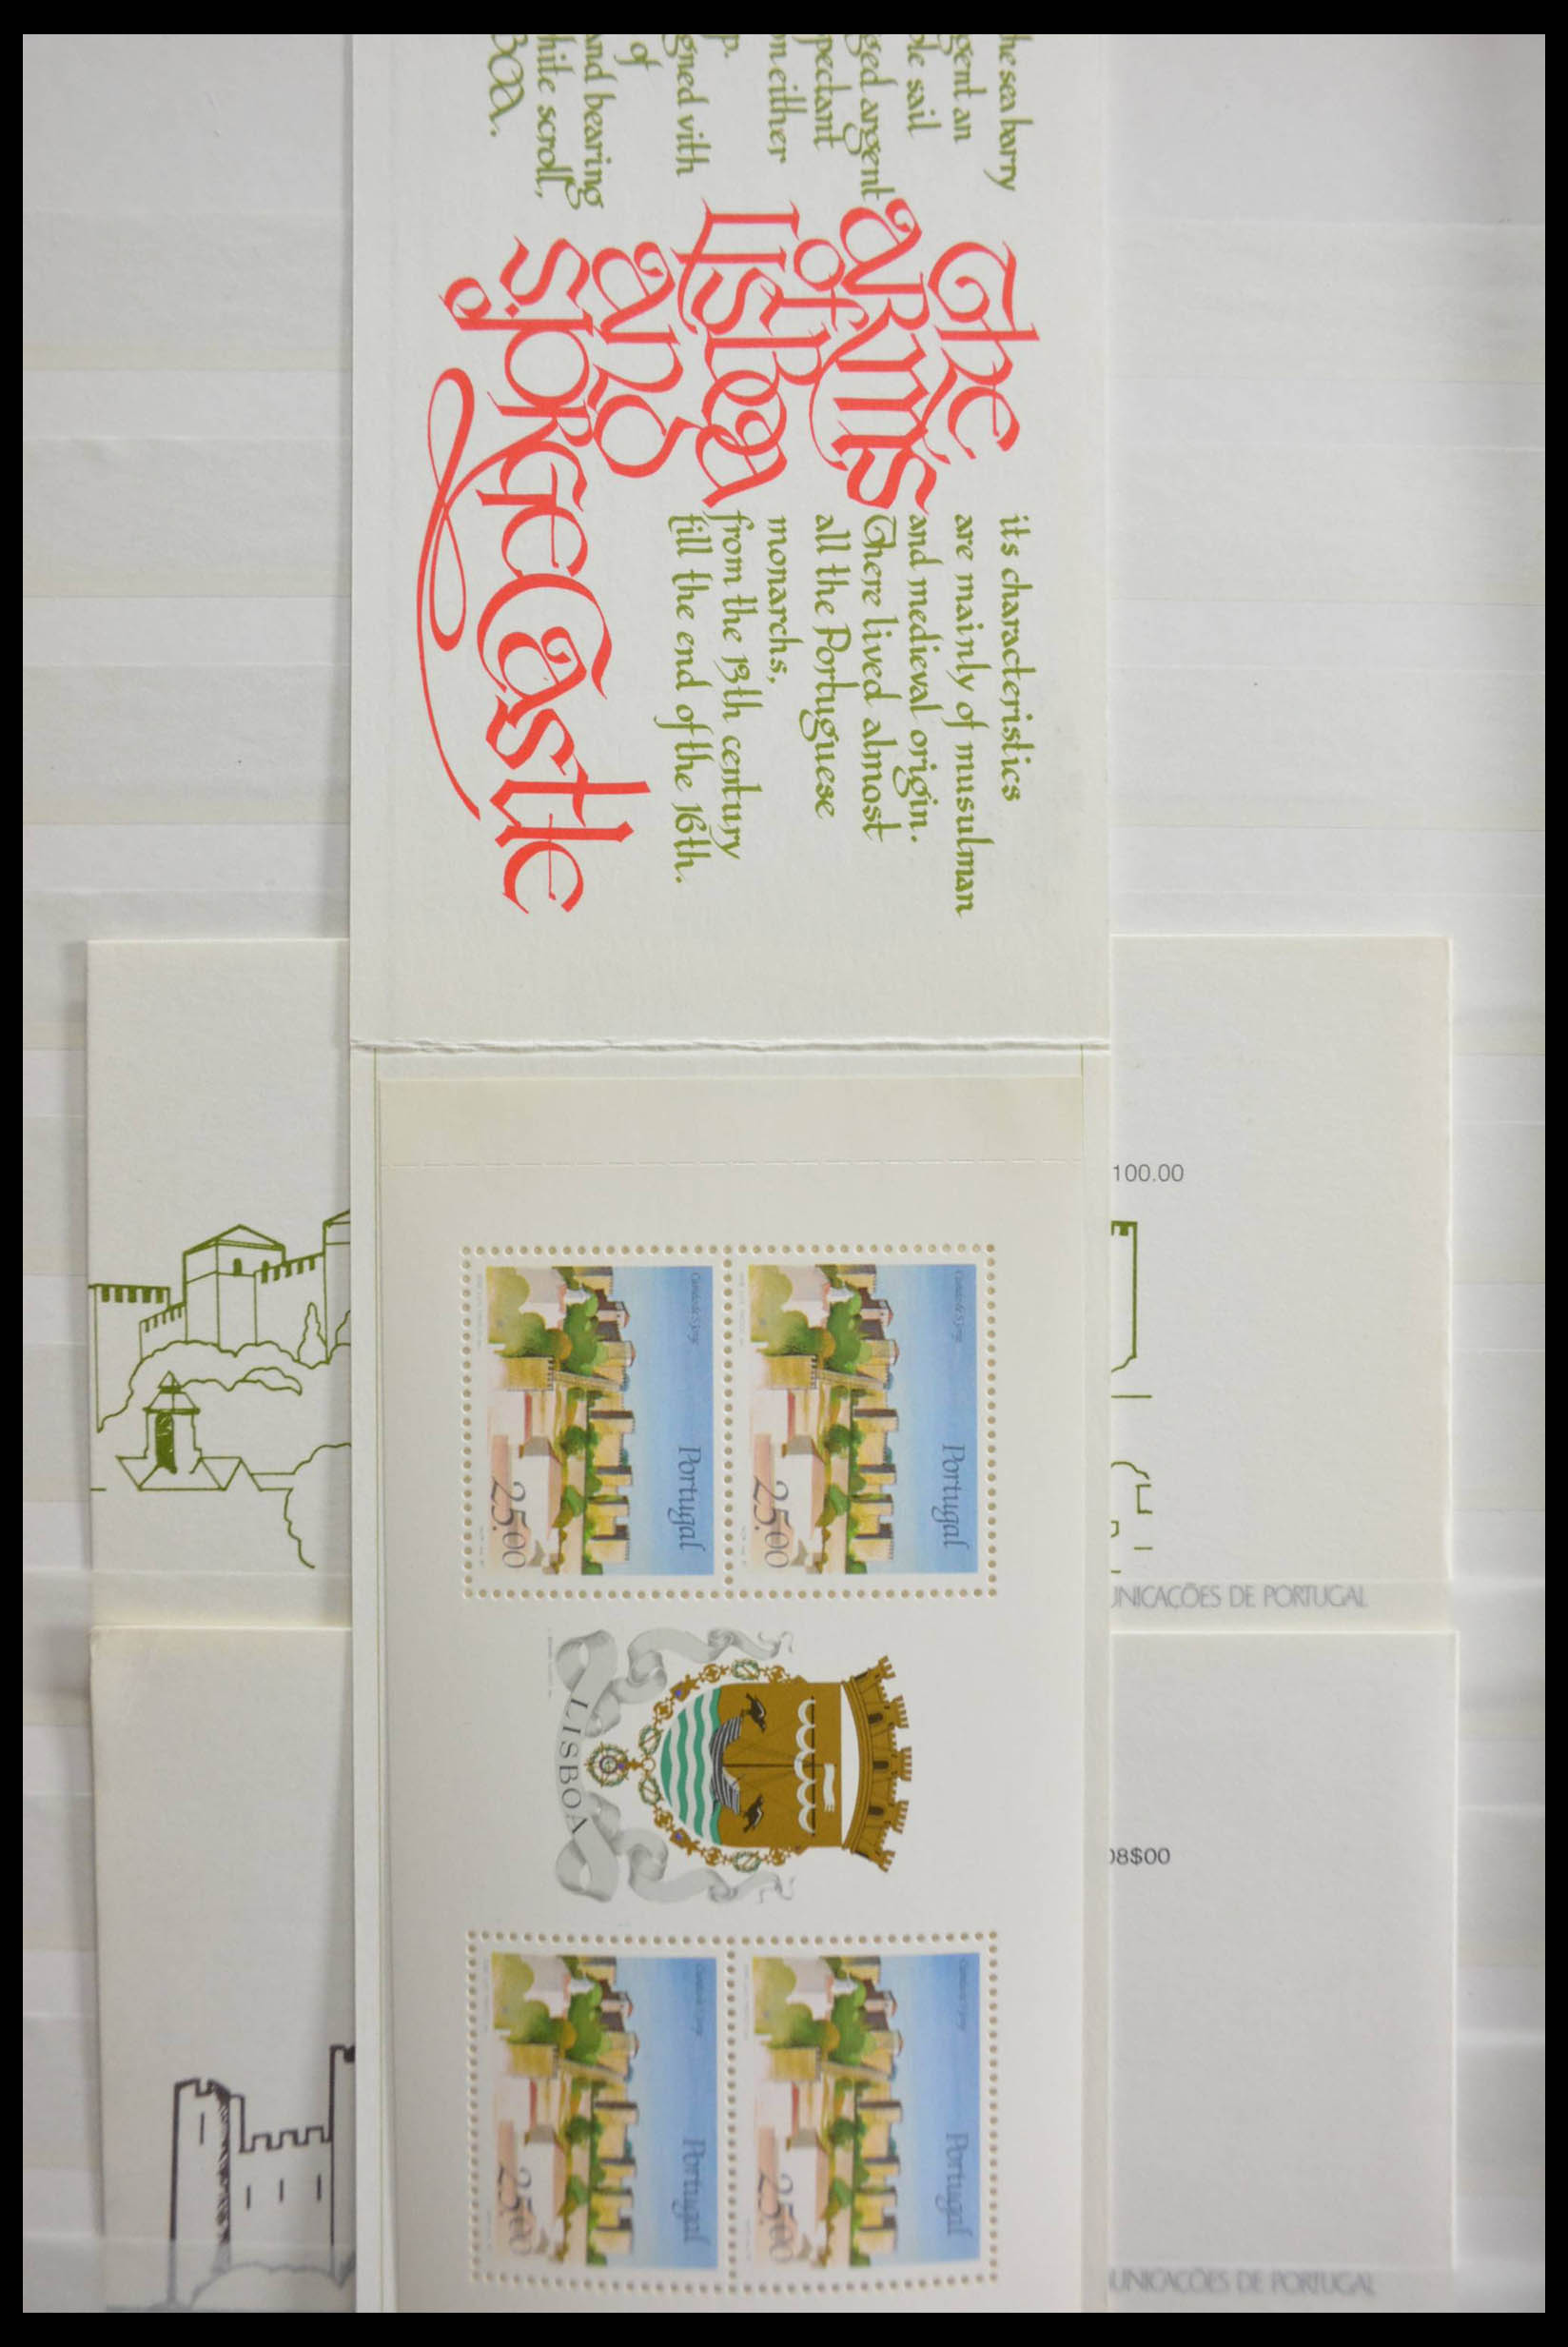 28540 101 - 28540 Portugal souvenir sheets.